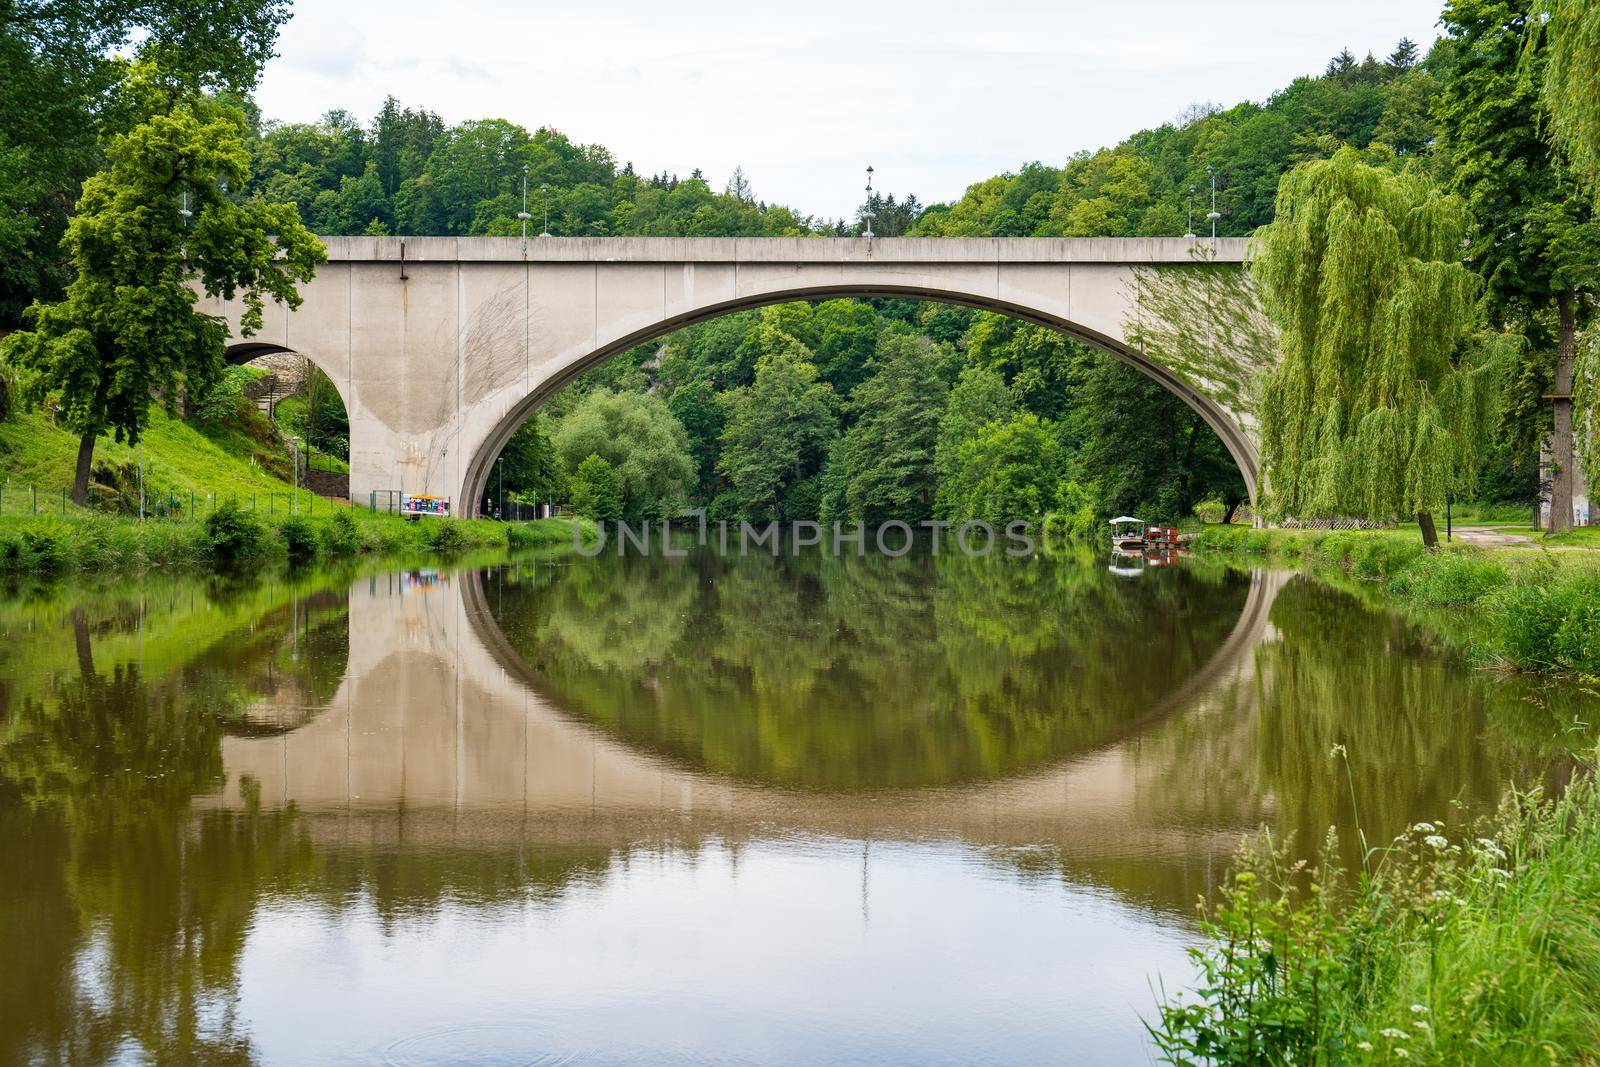 bridge reflecting in the calm river